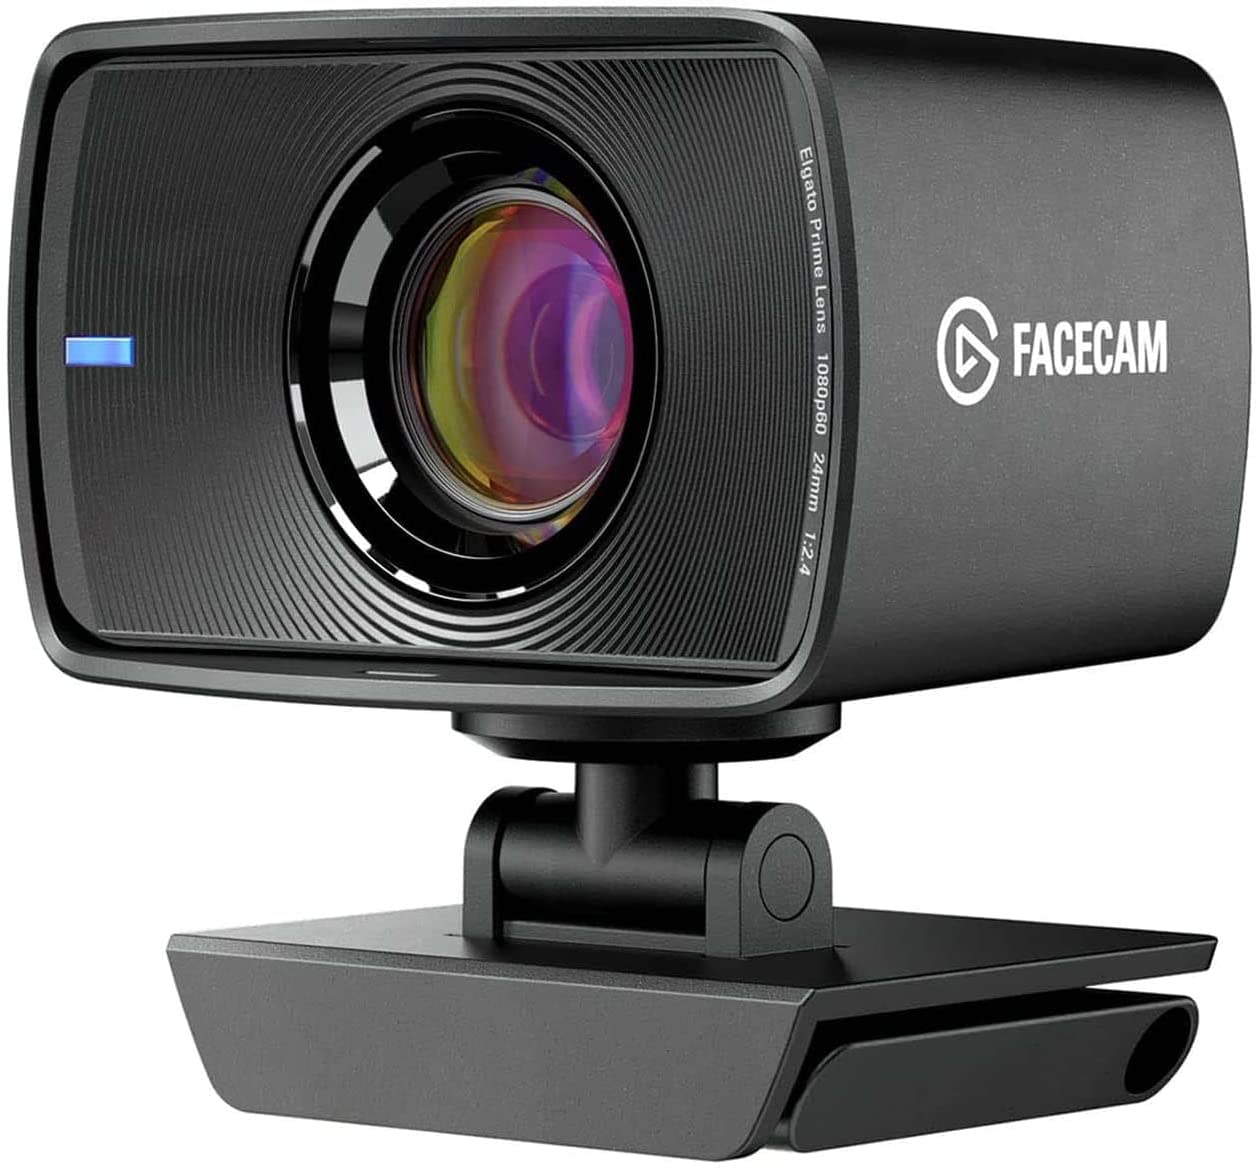 Where Can I Buy Webcam Near Me?